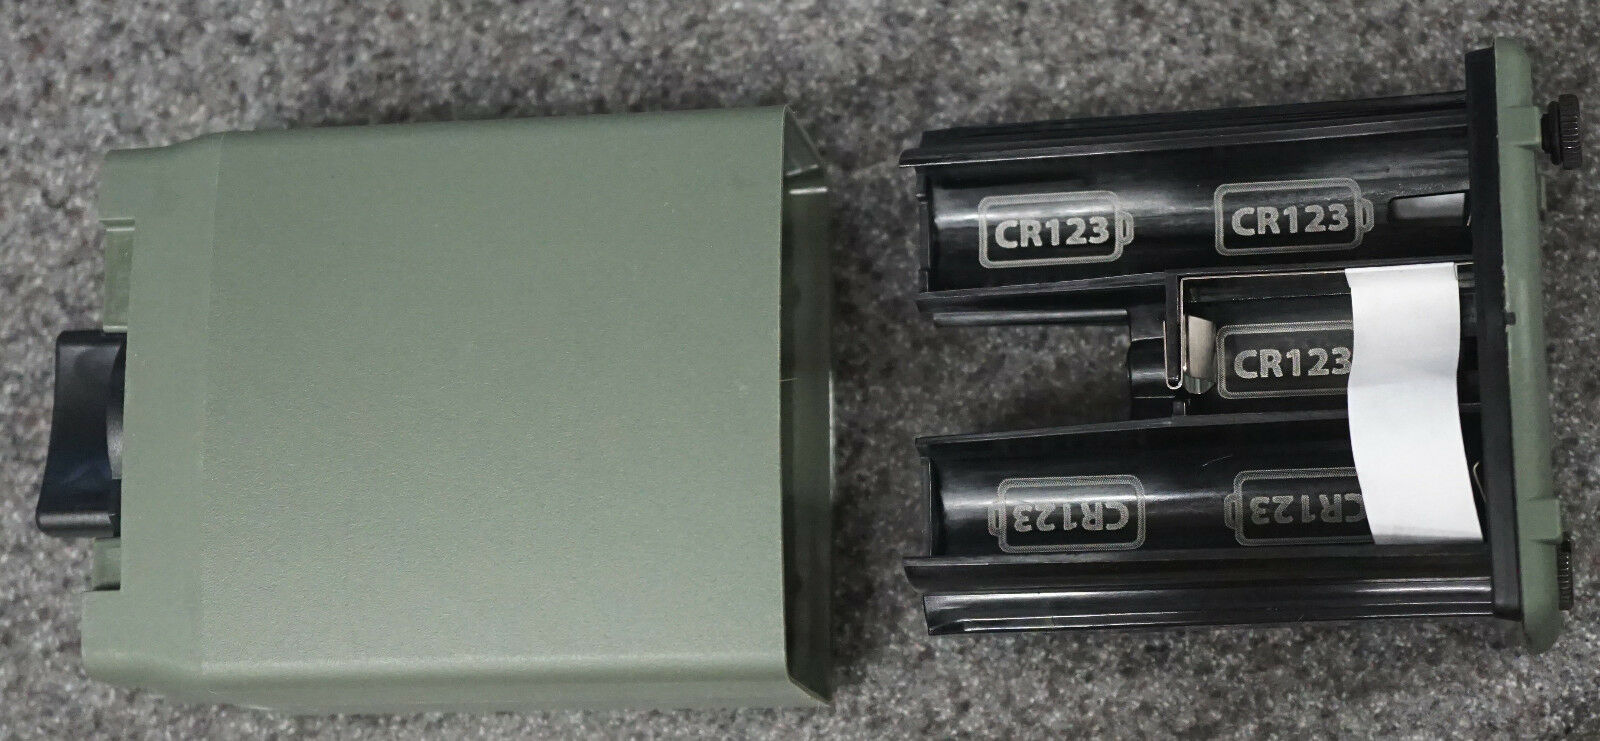 Harris Military Prc-152 Radio L123 Battery Holder Rf-5911-ps002 12050-2005-01